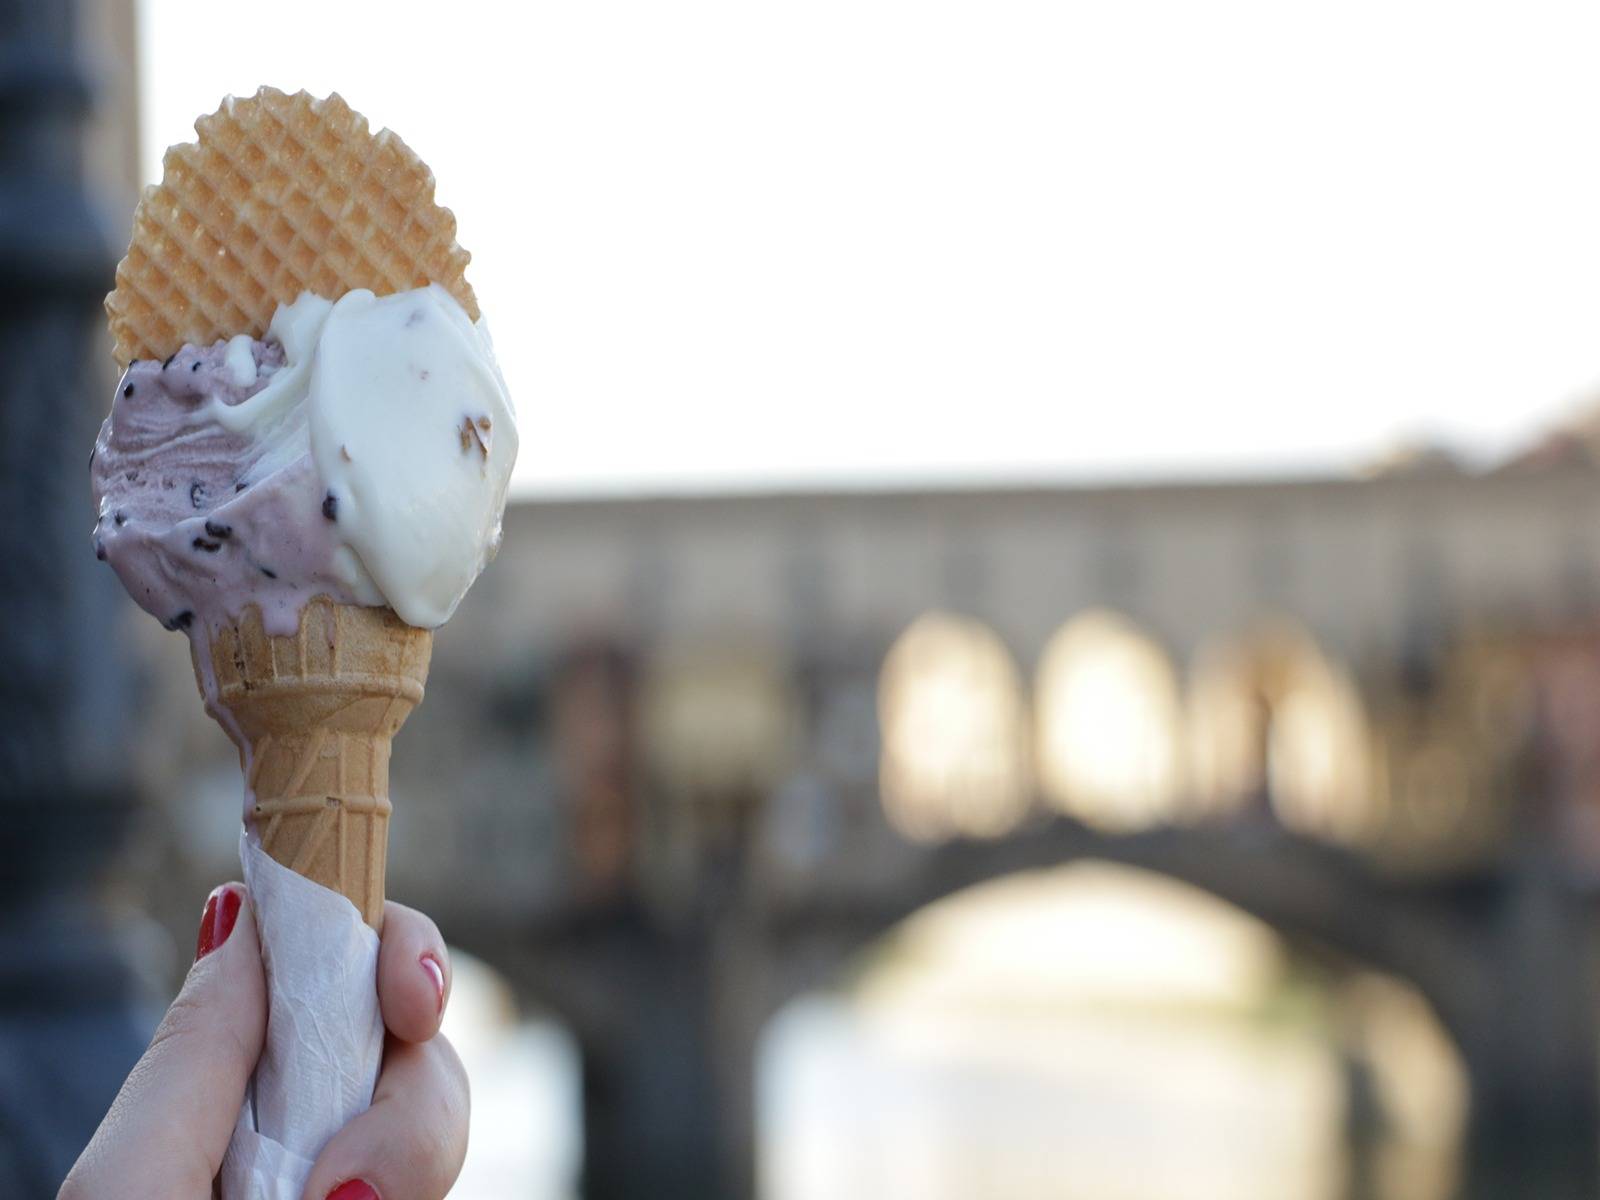 Florence Ice Cream